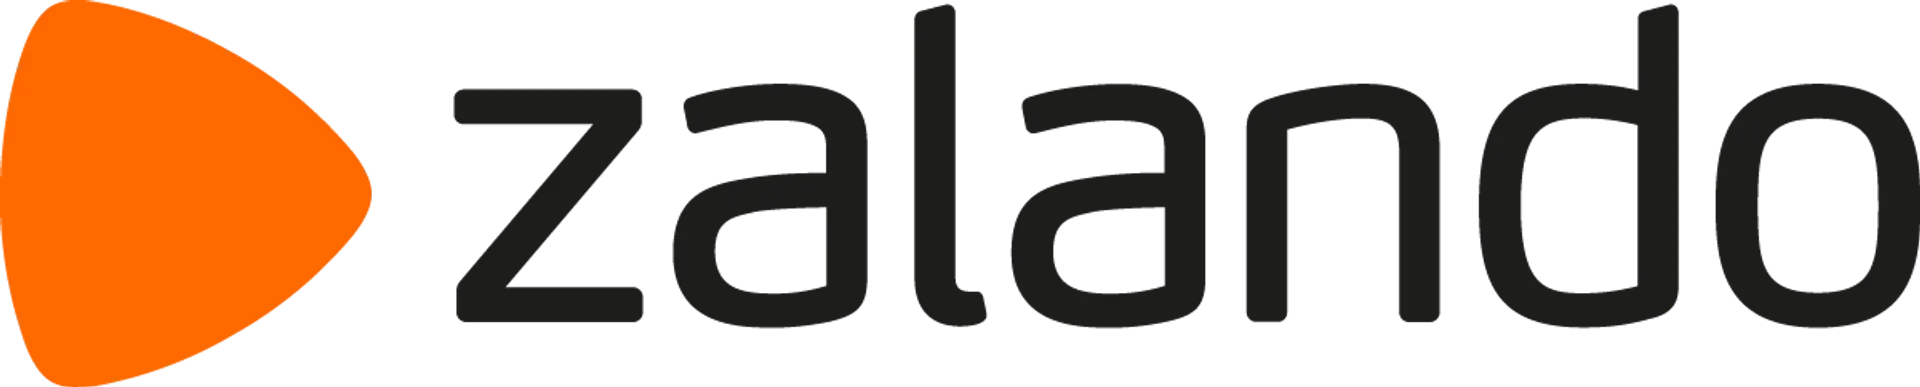 ZALANDO logo